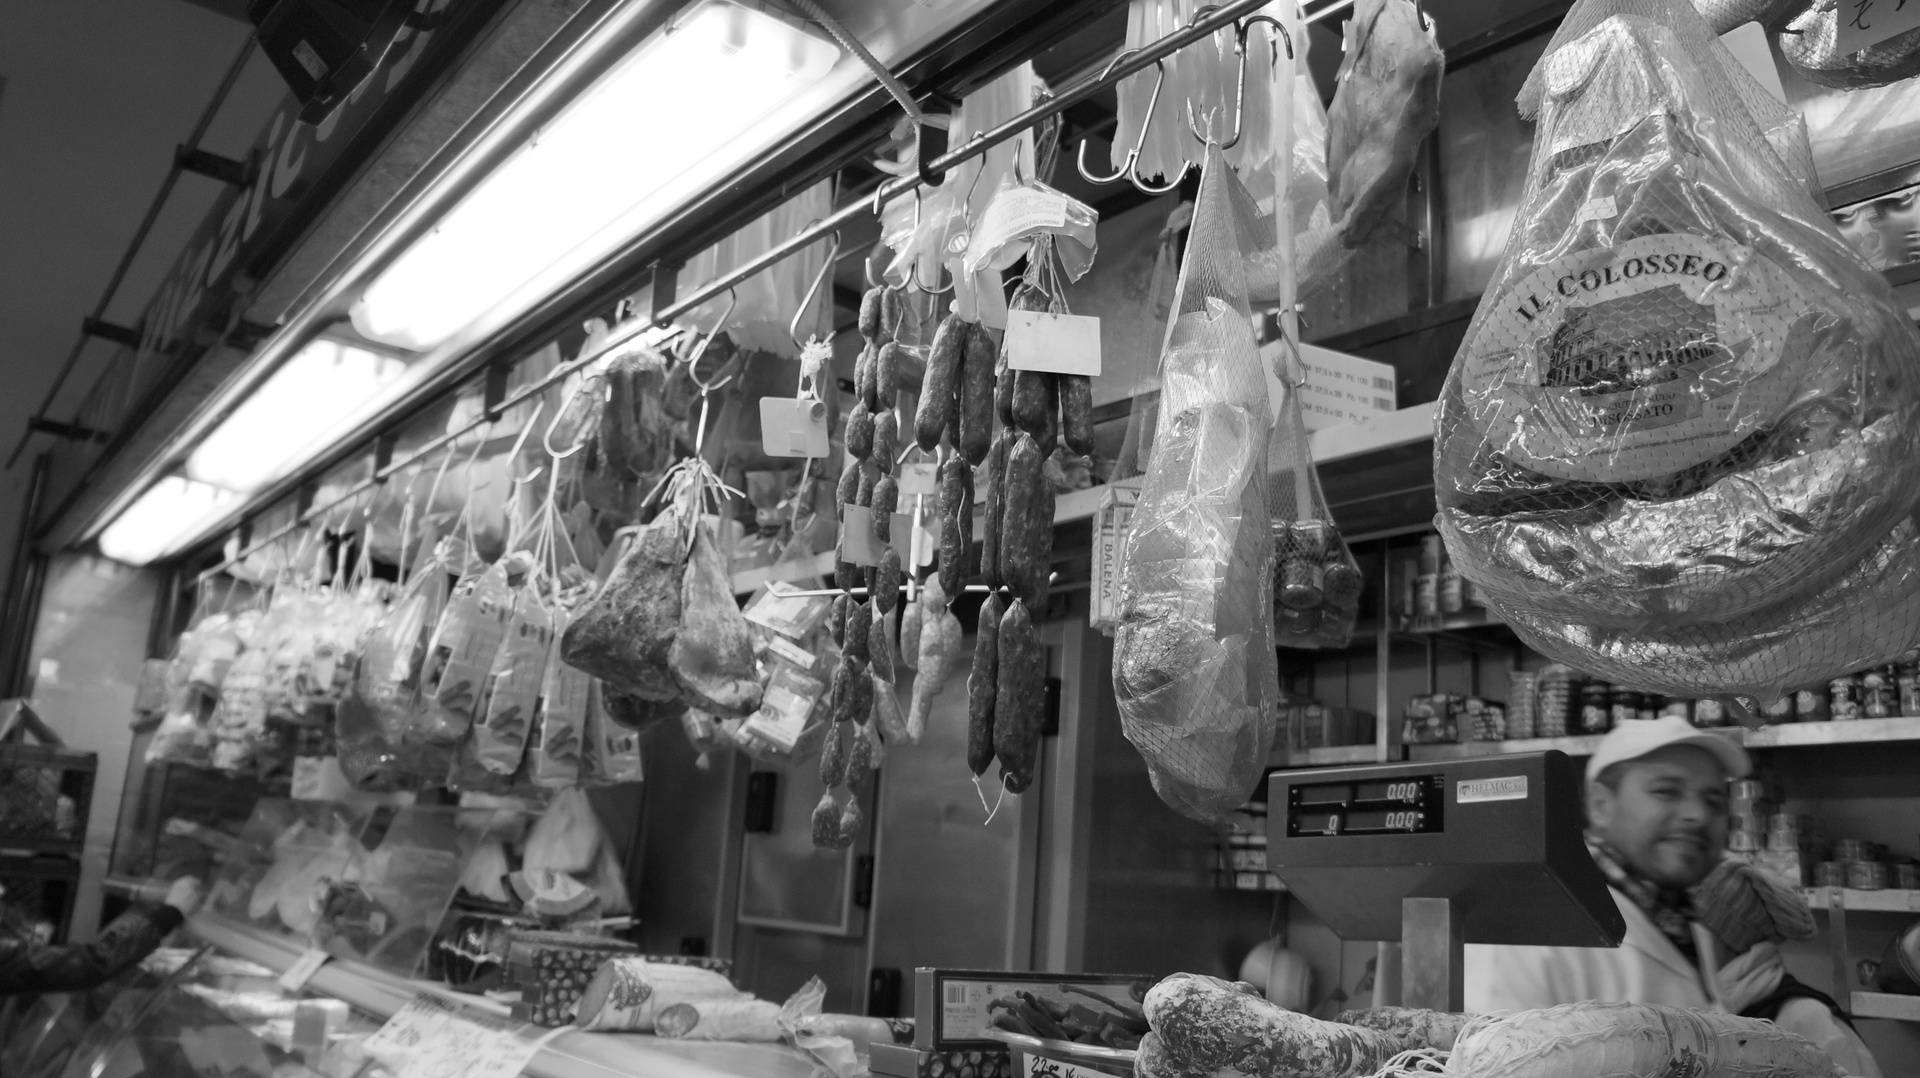 Food market, Rome